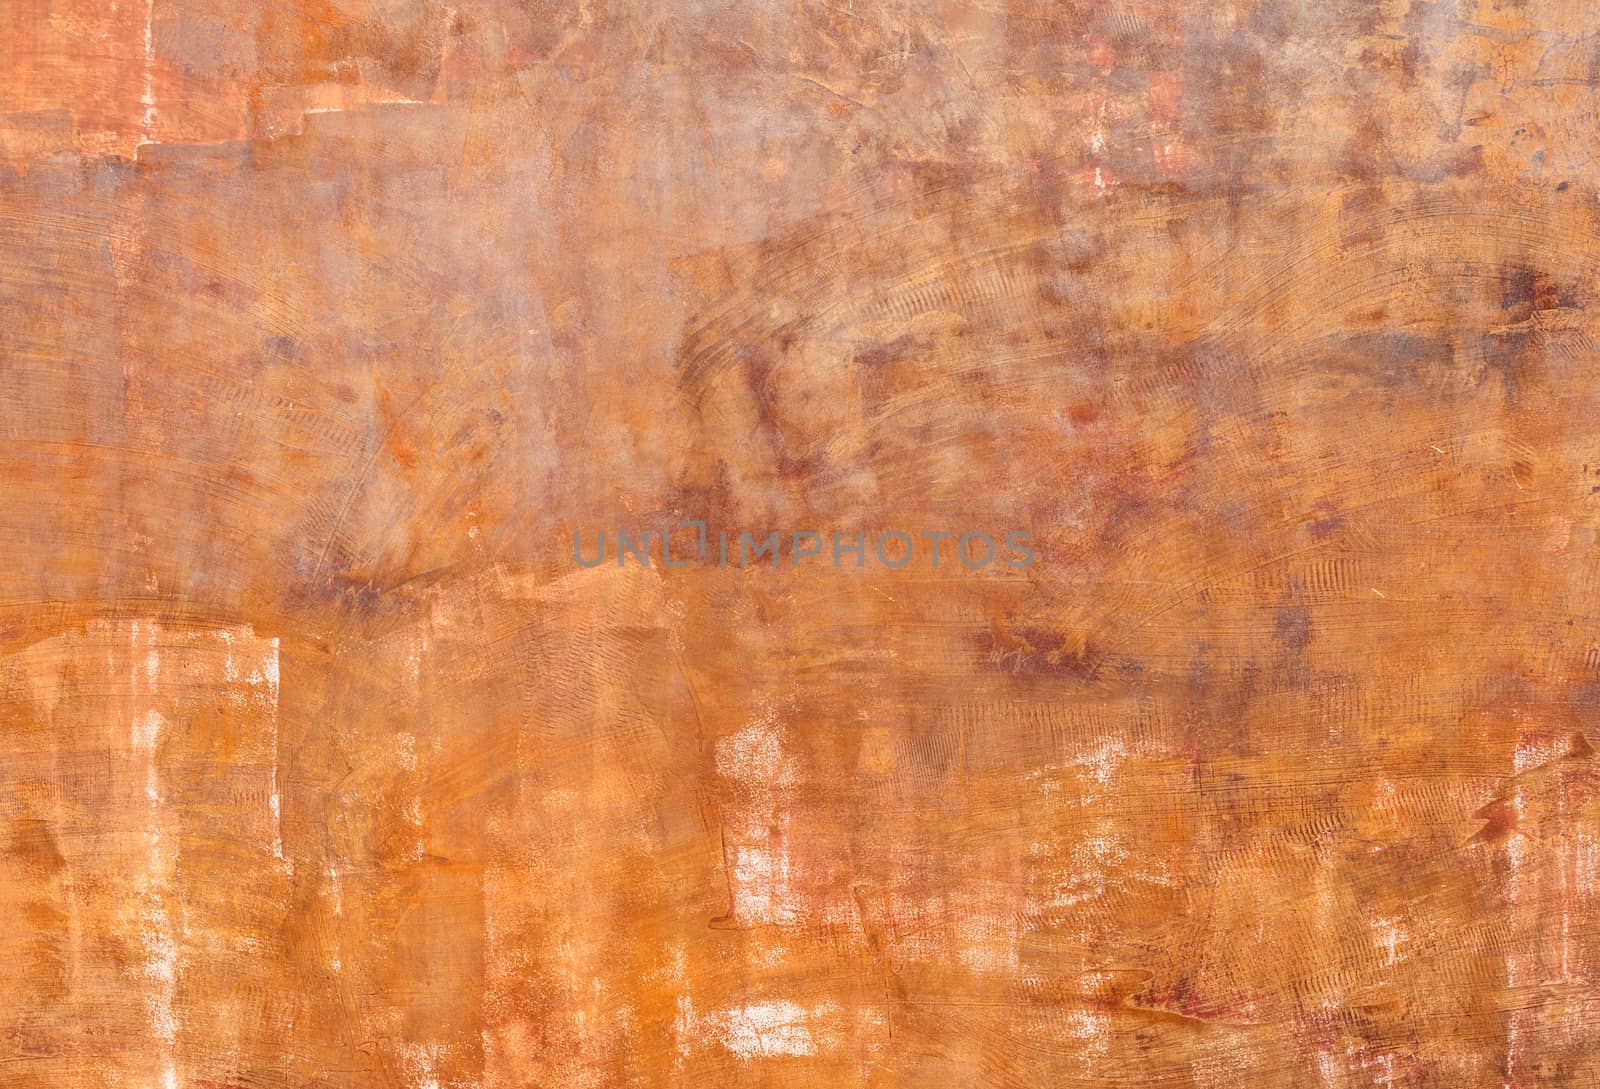 Grunge orange red wall background  by vitawin